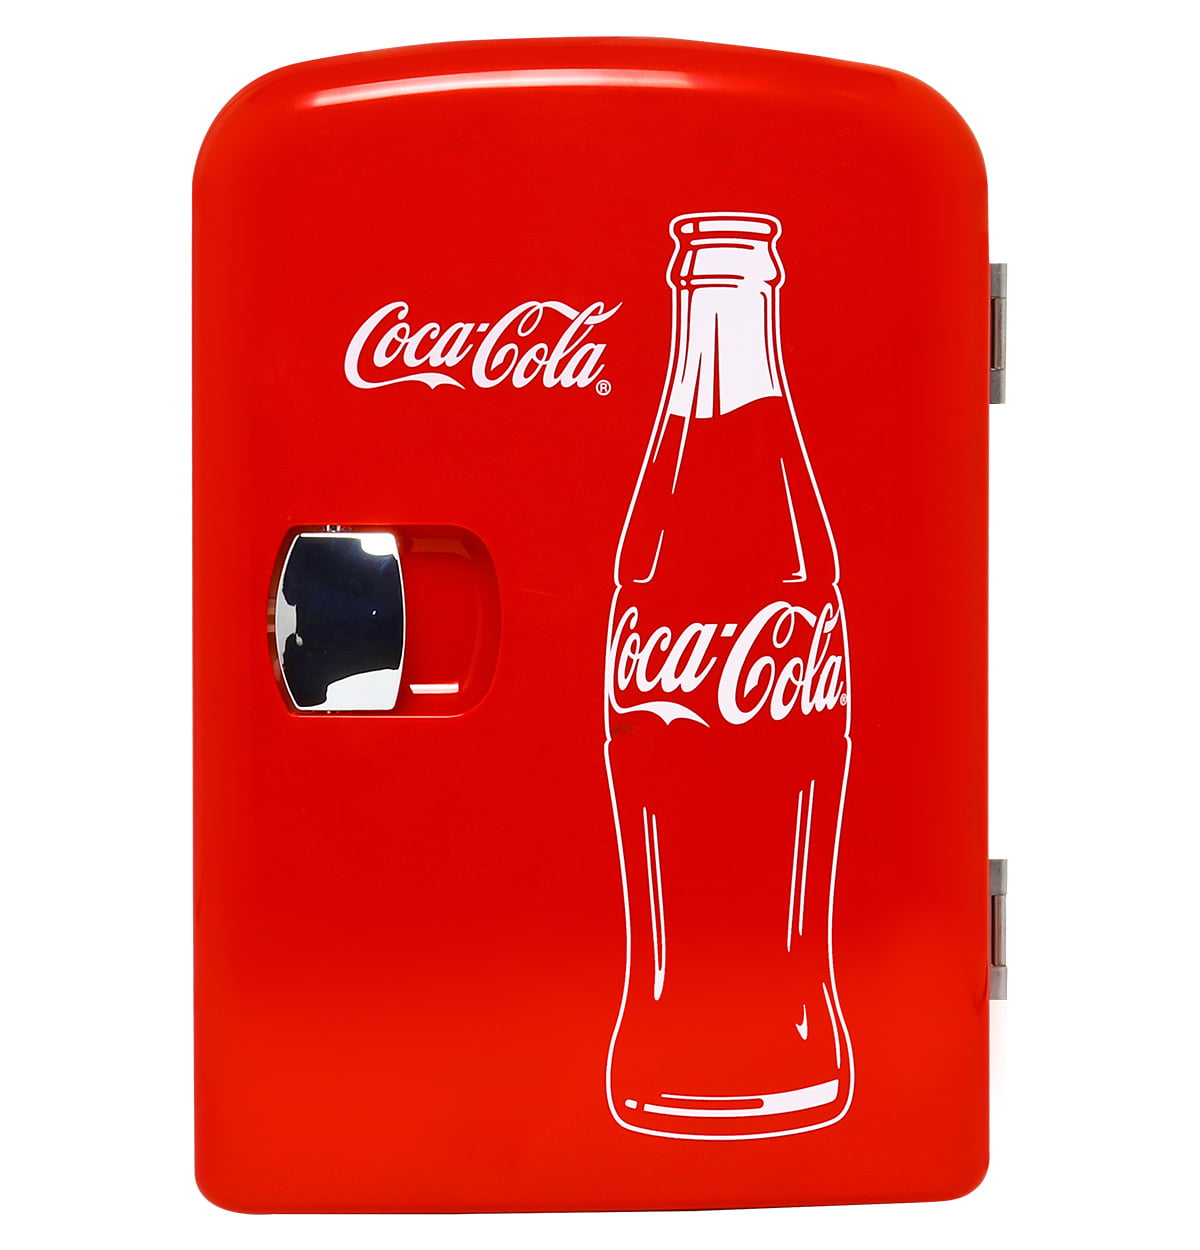 fridge coca cola price